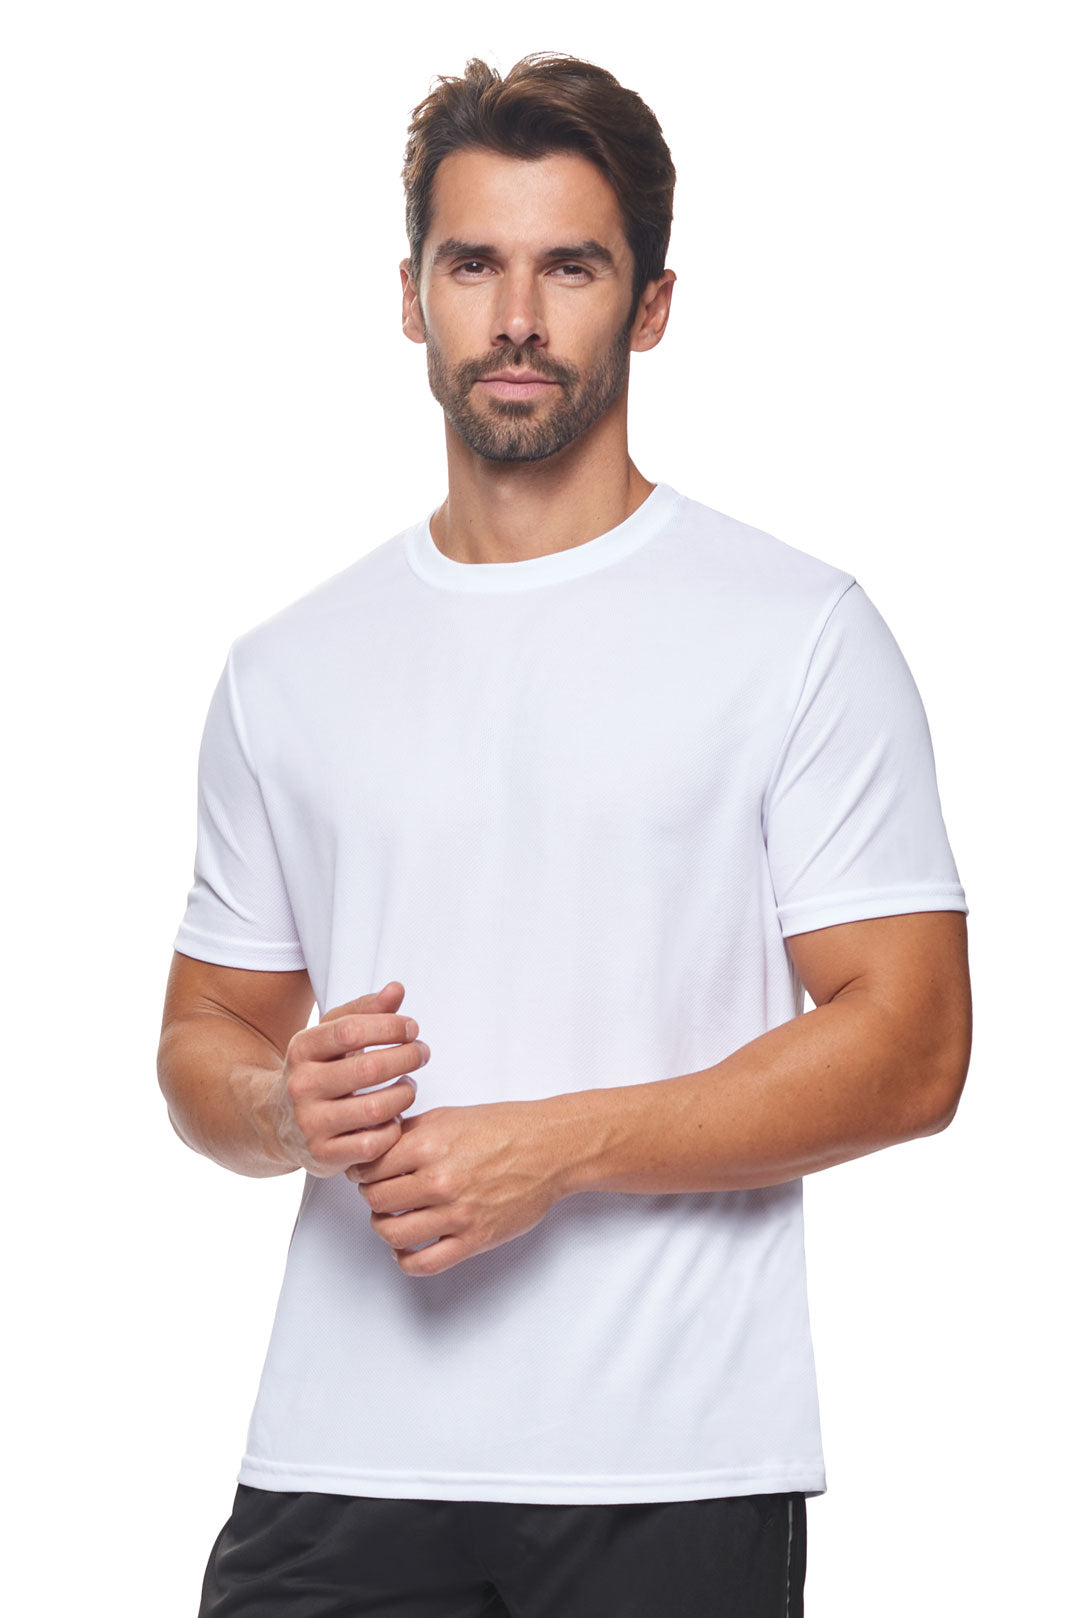 Expert Brand Wholesale Men's Oxymesh Tec Tee Performance Fitness Running Shirt in white#white